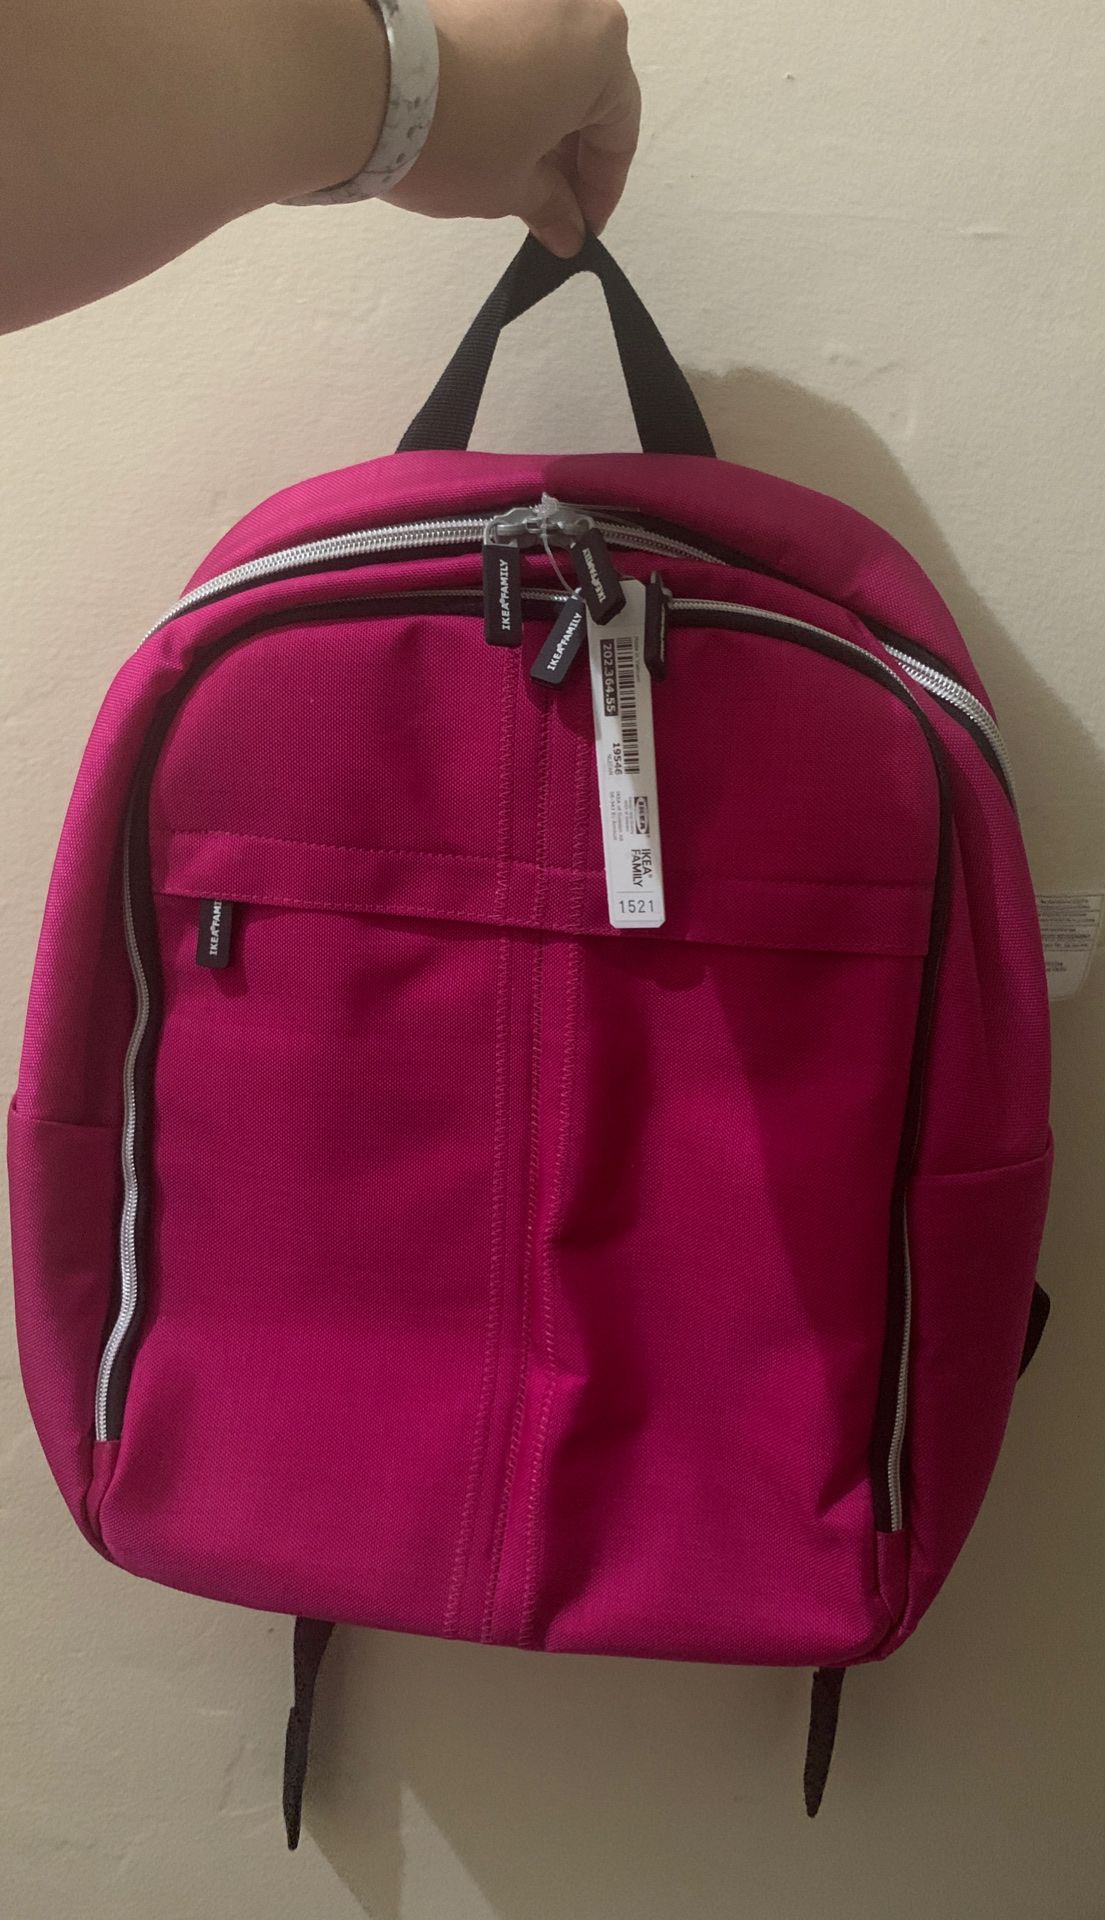 Ikea LapTop Backpack